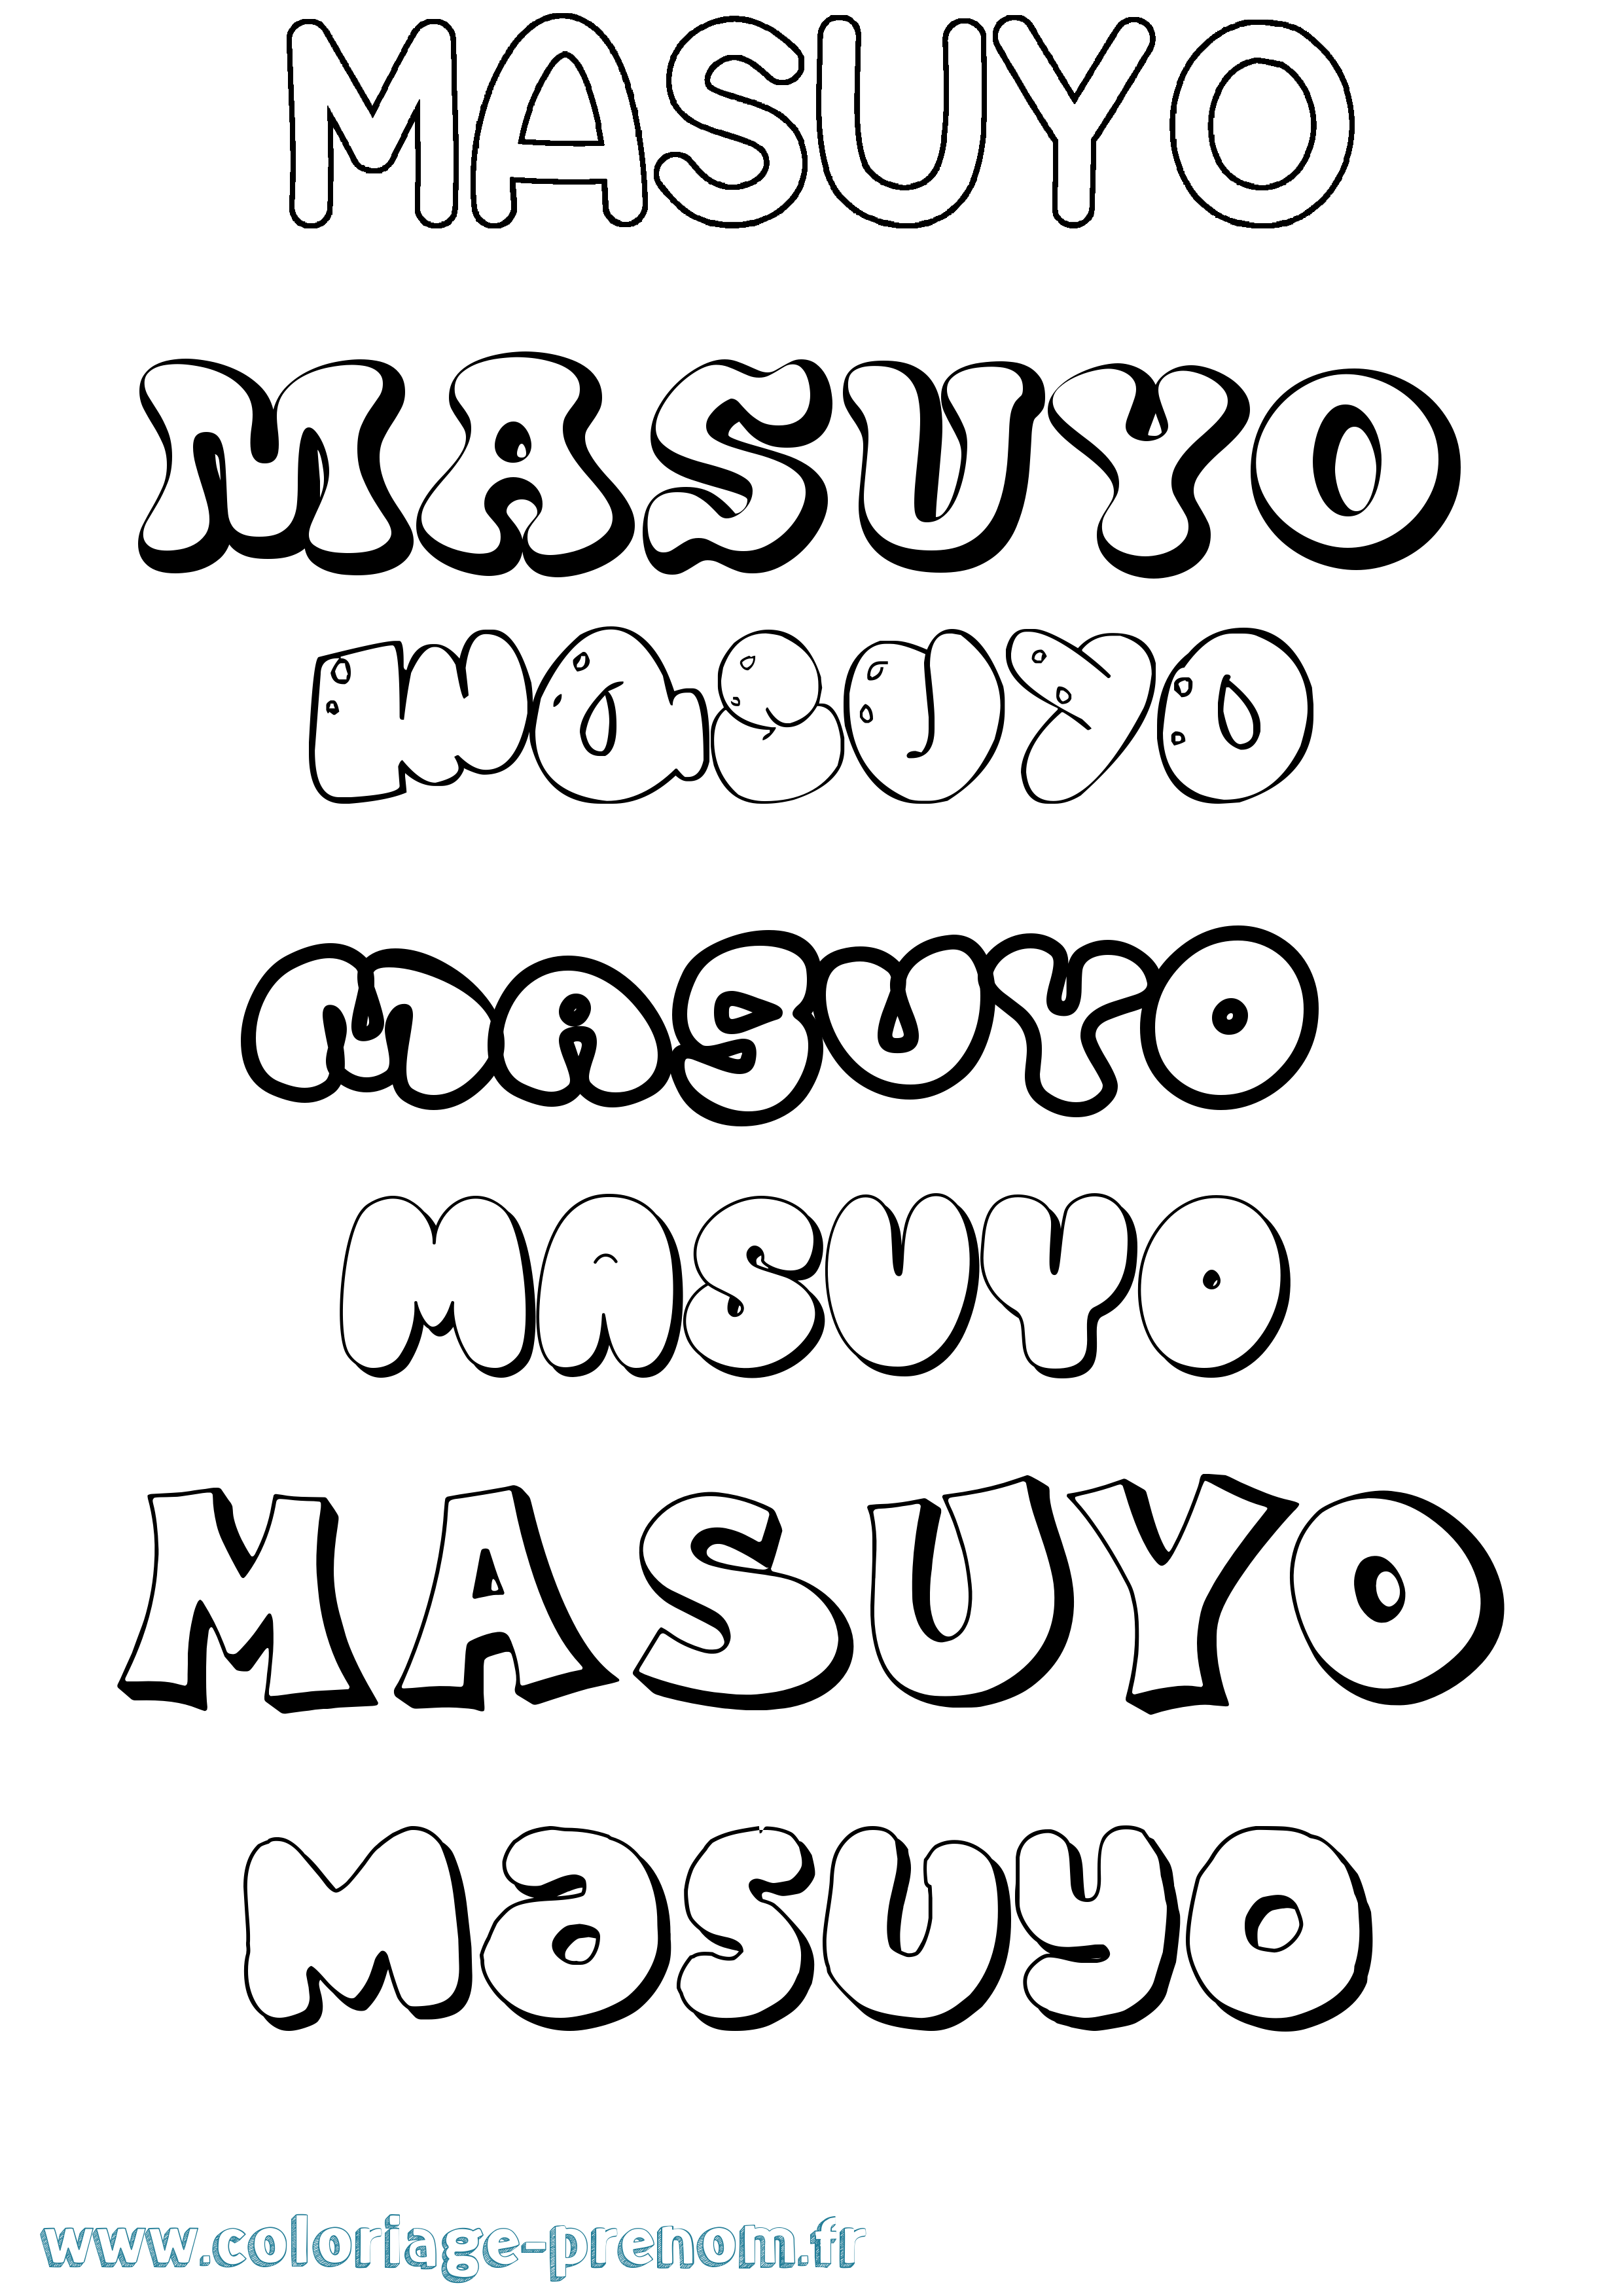 Coloriage prénom Masuyo Bubble